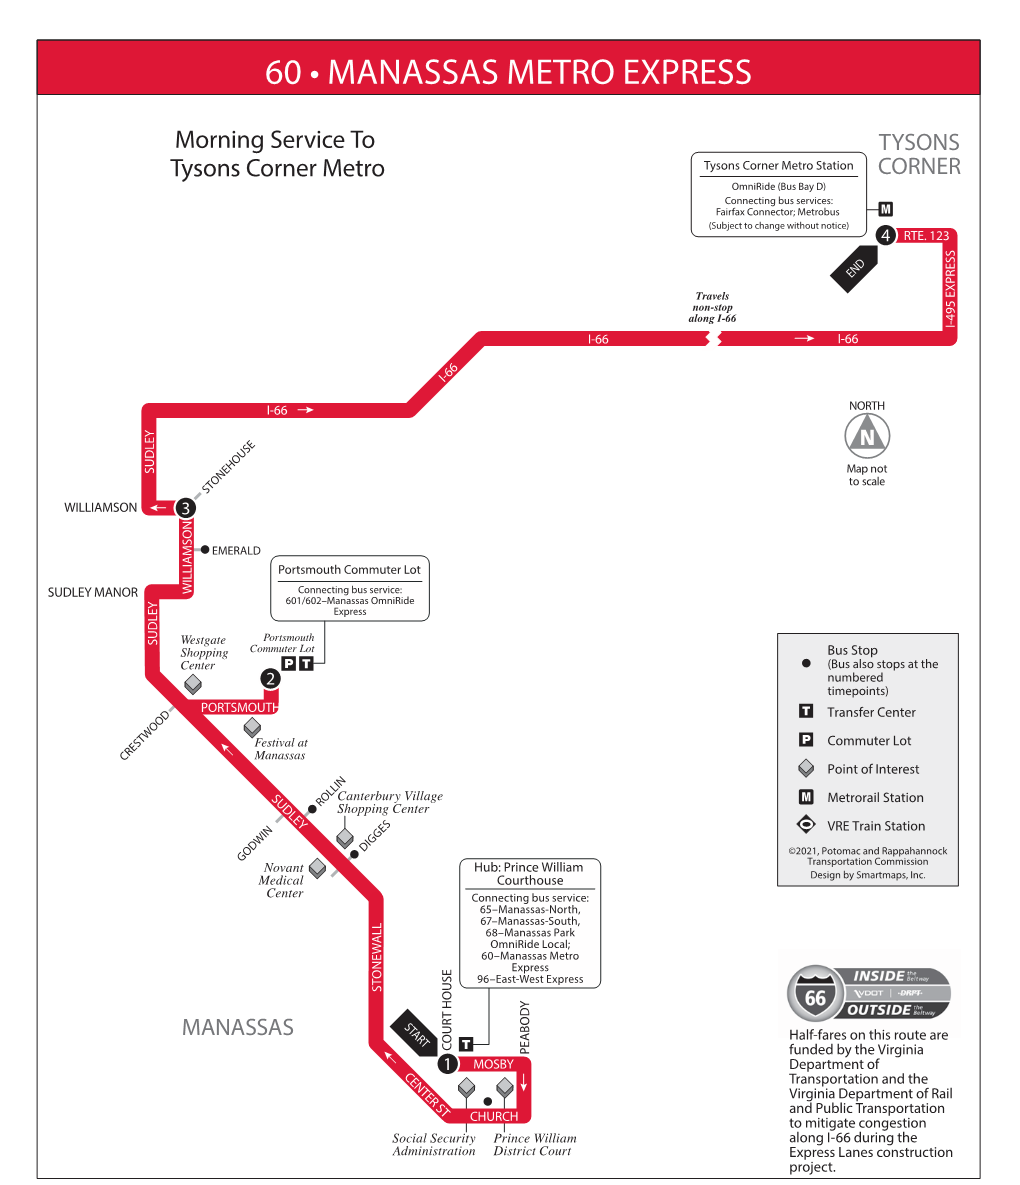 60 • Manassas Metro Express